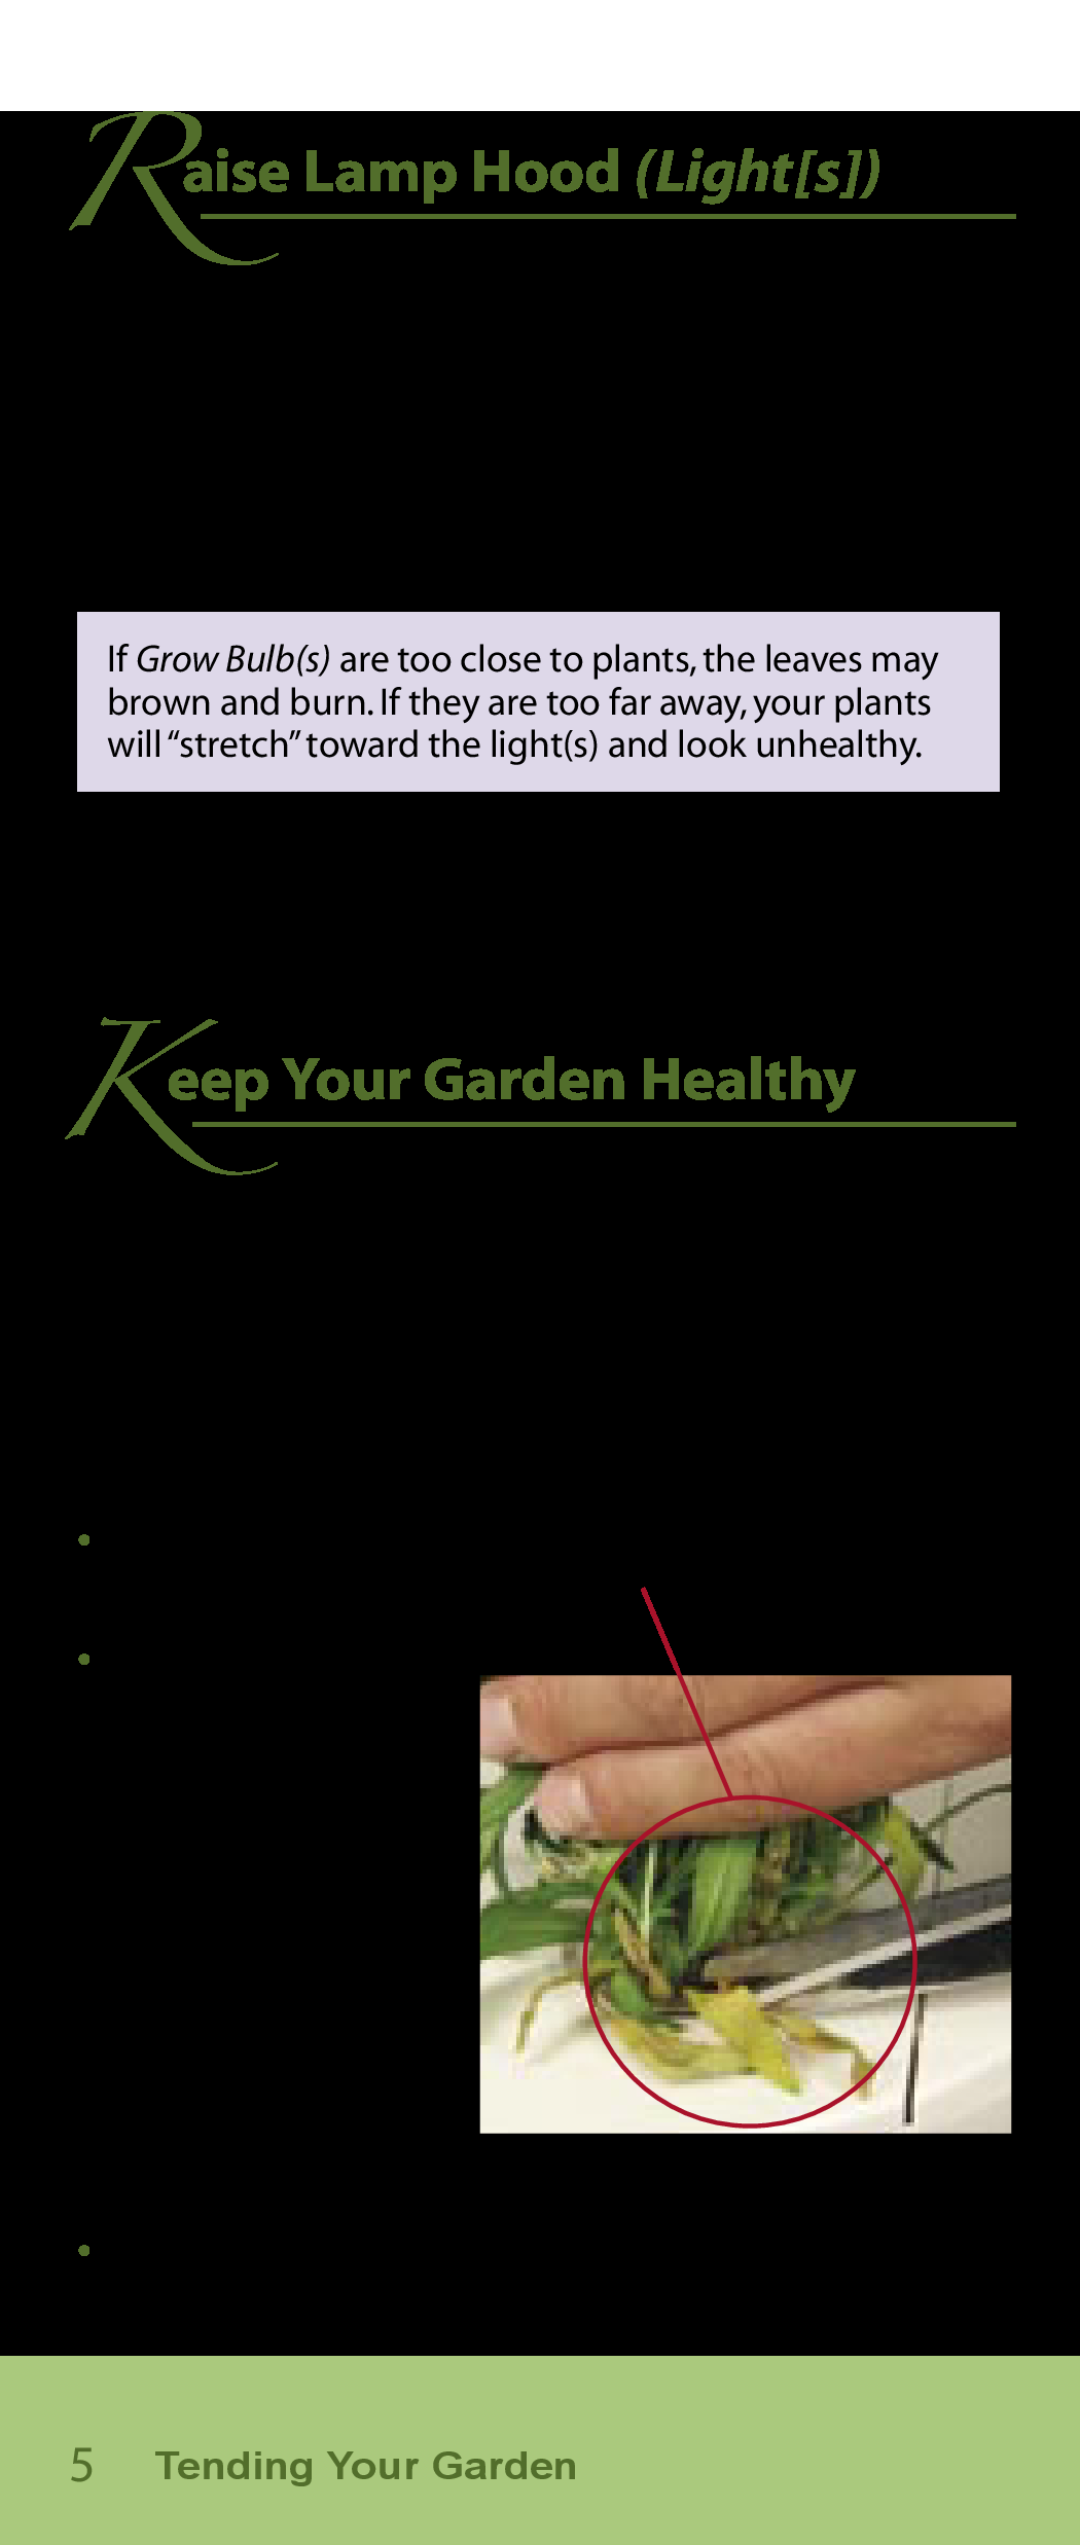 AeroGarden Flower Series manual Raise Lamp Hood Lights, Keep Your Garden Healthy, Keep Grow Surface clear of dead leaves 